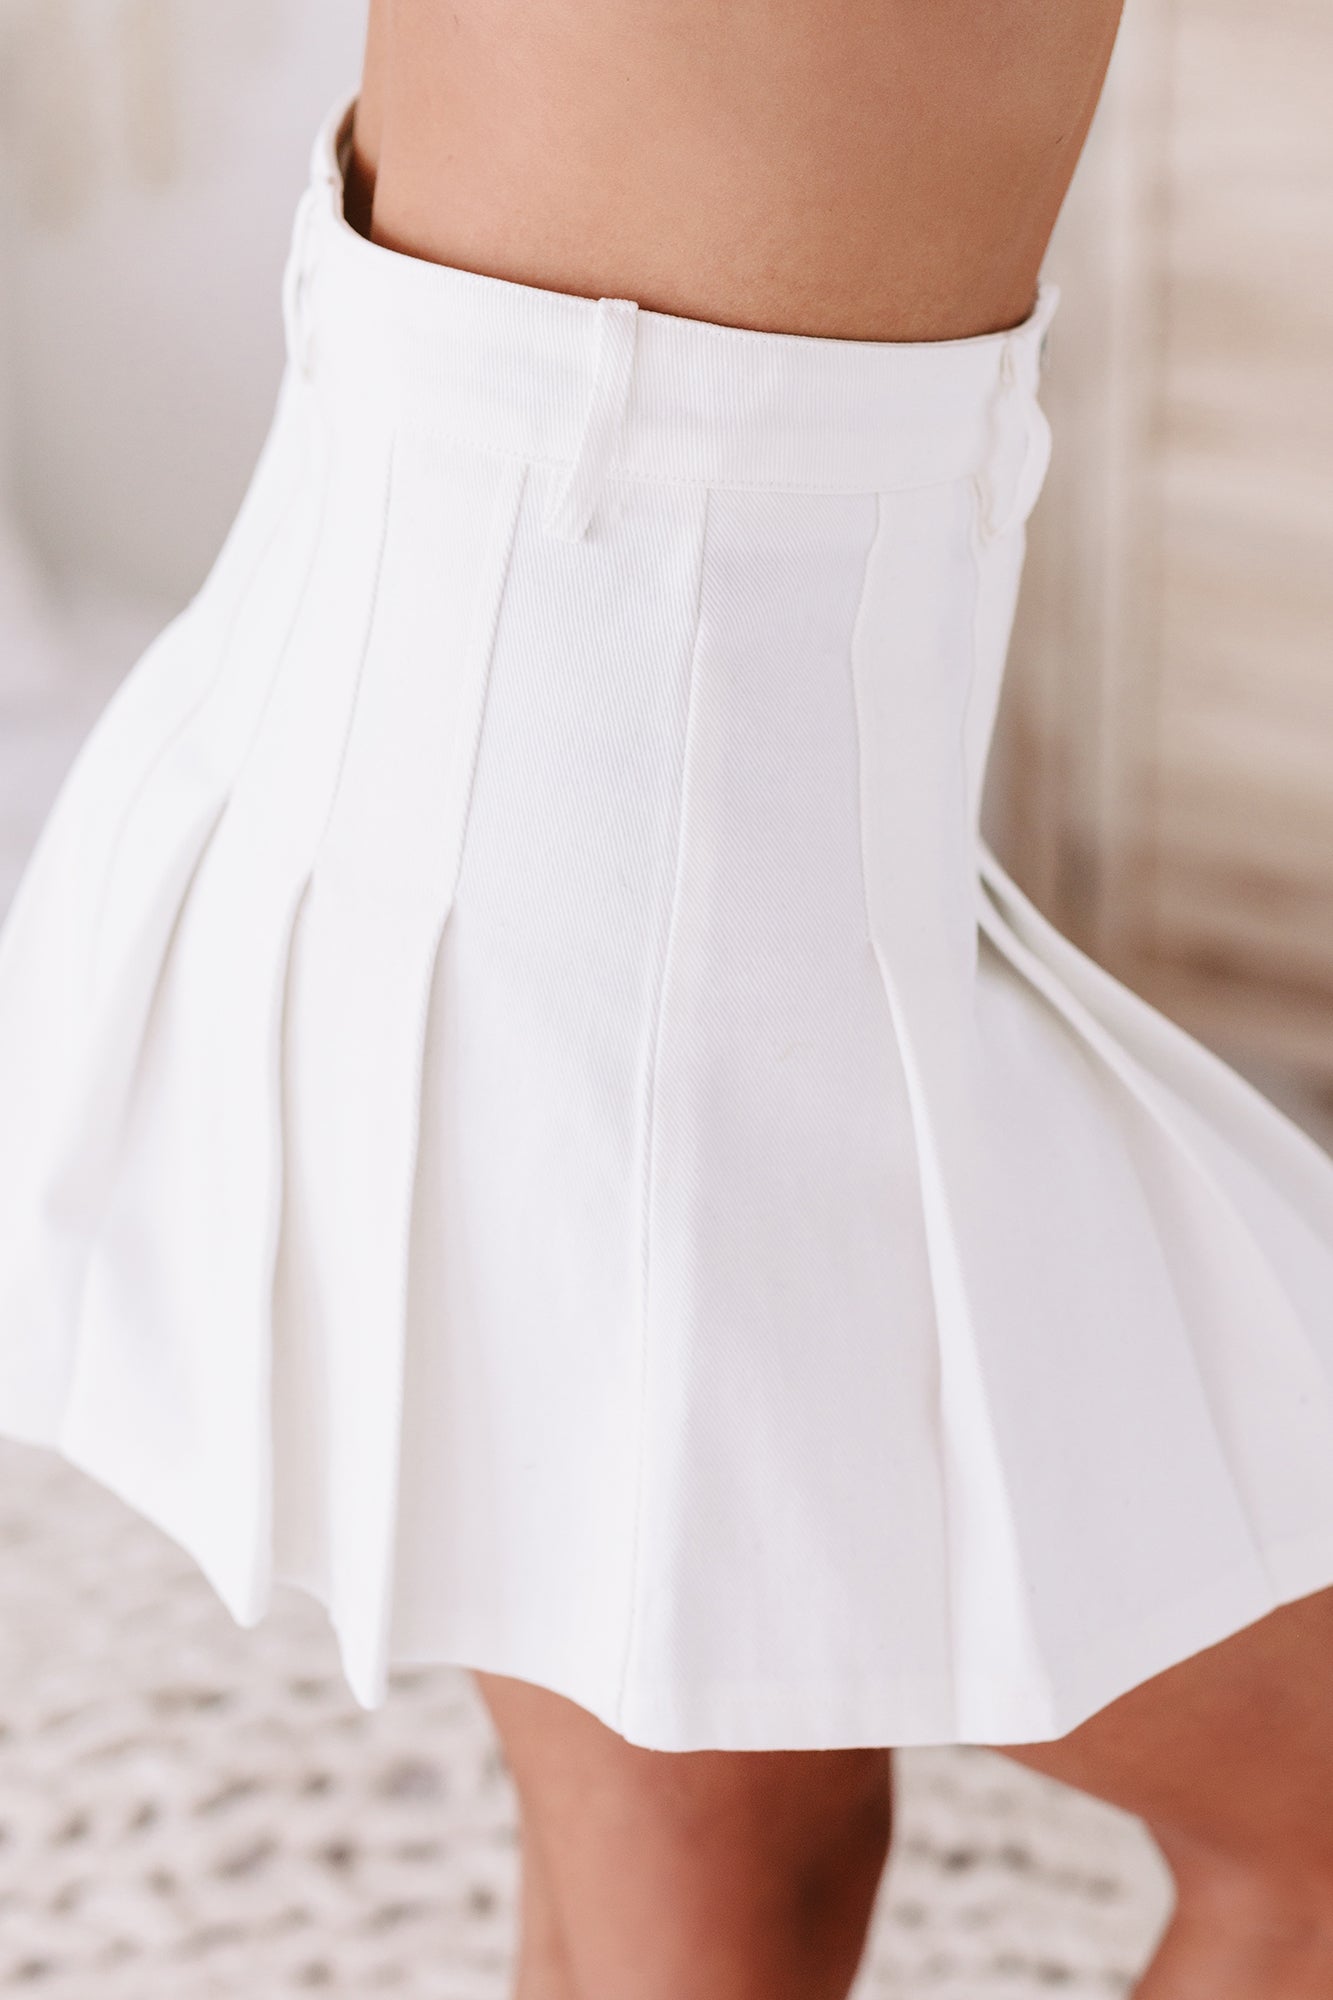 Roland-Garros Denim Tennis Skirt (White Denim) - NanaMacs